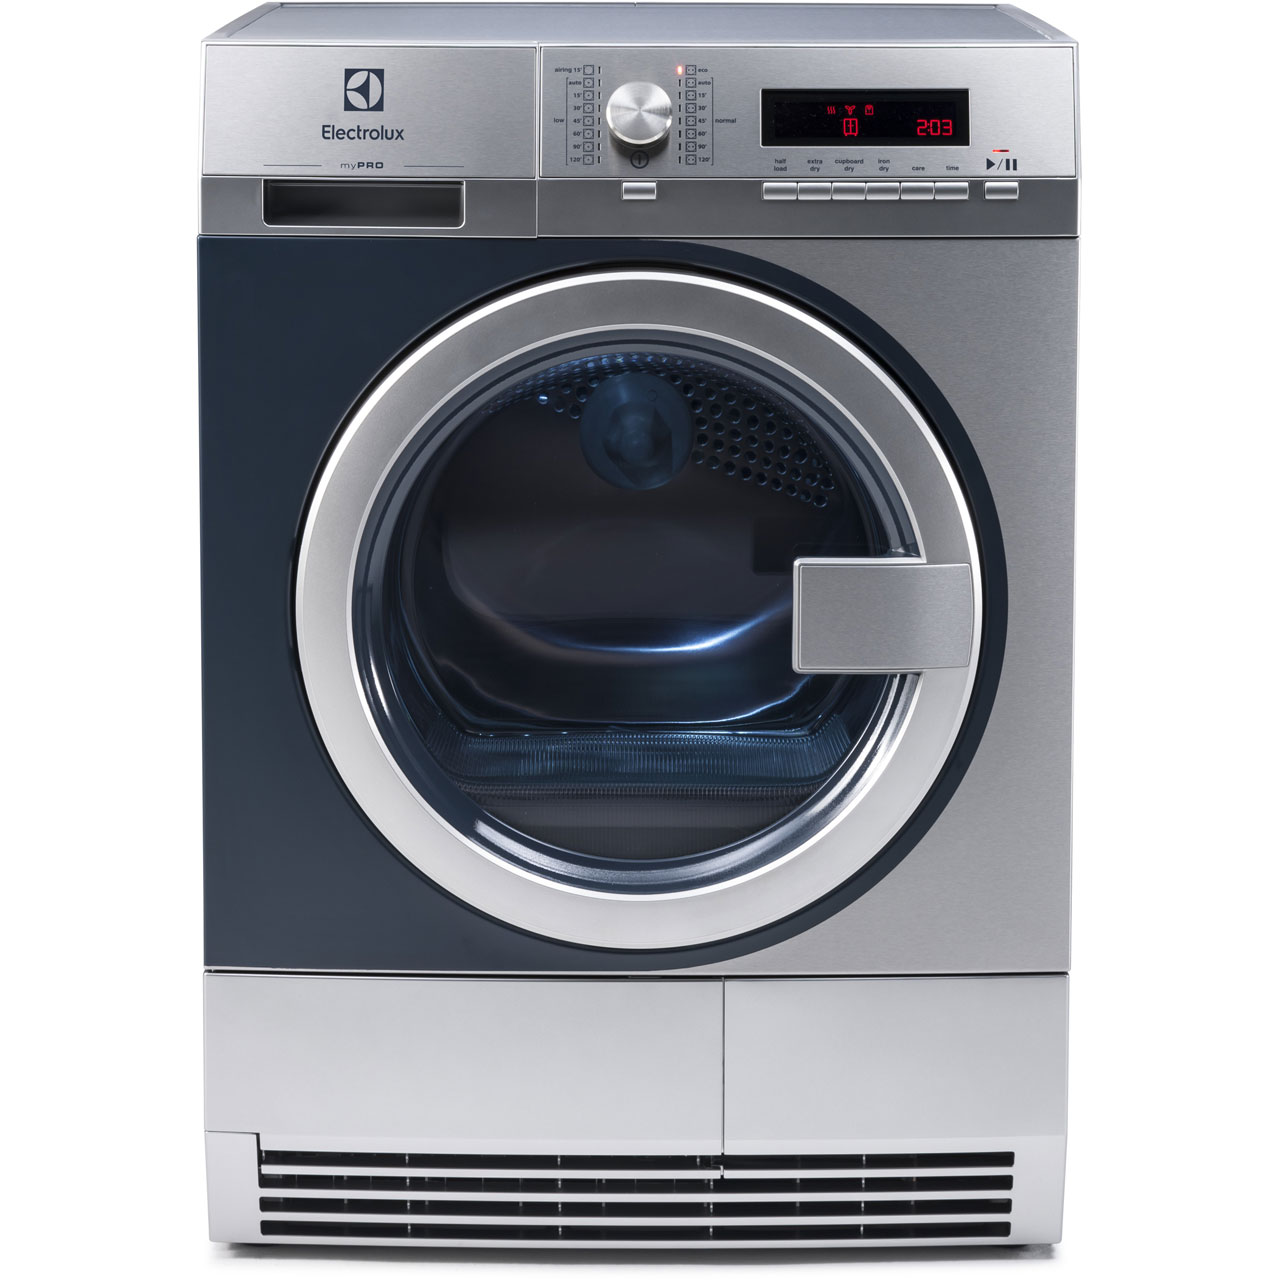 Electrolux myPro TE1120 8Kg Semi Commercial Condenser Tumble Dryer Review